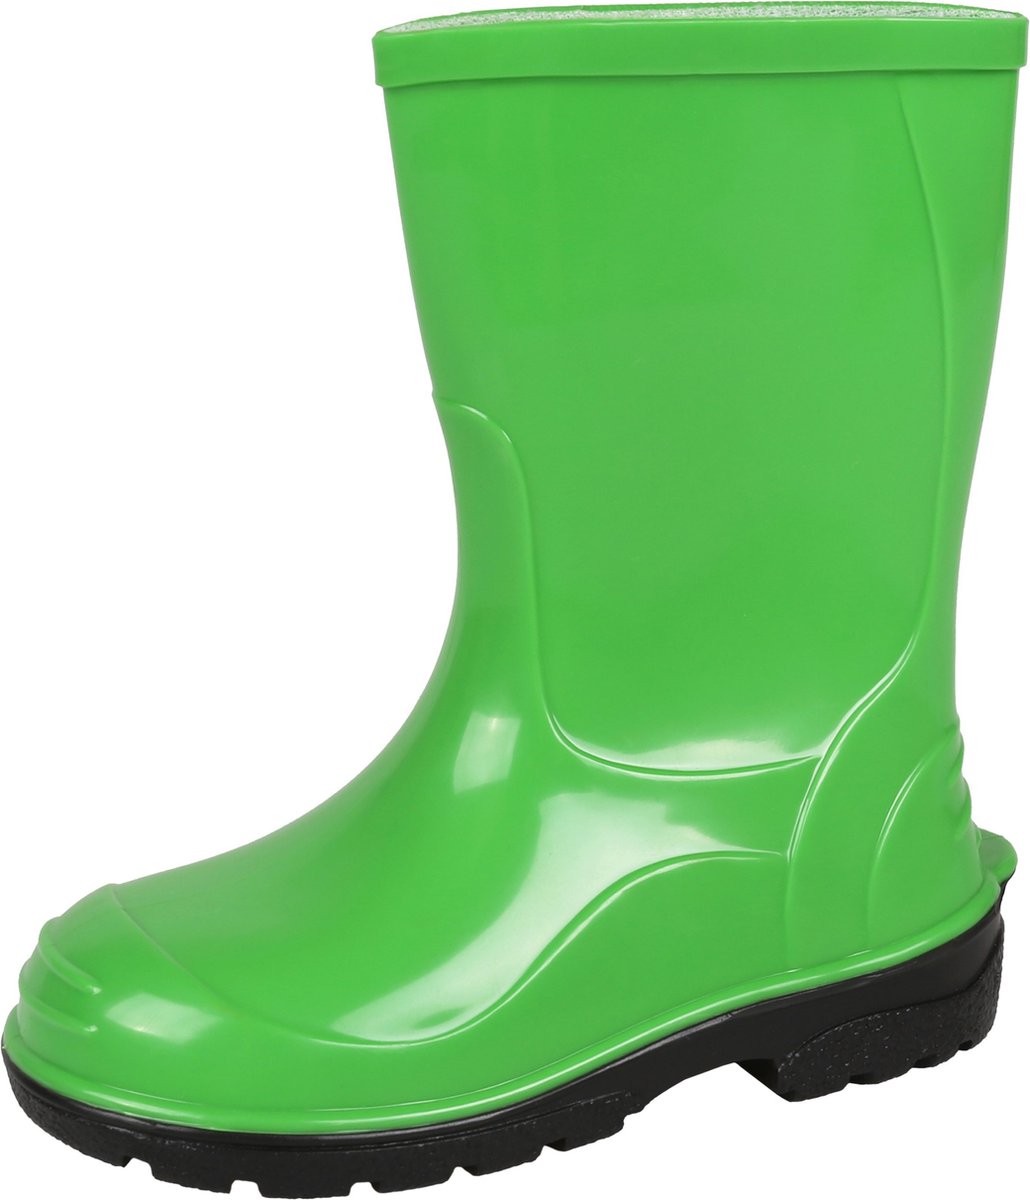 Groene laarzen van PVC materiaal, met antislipzool - OLI LEMIGO / 28